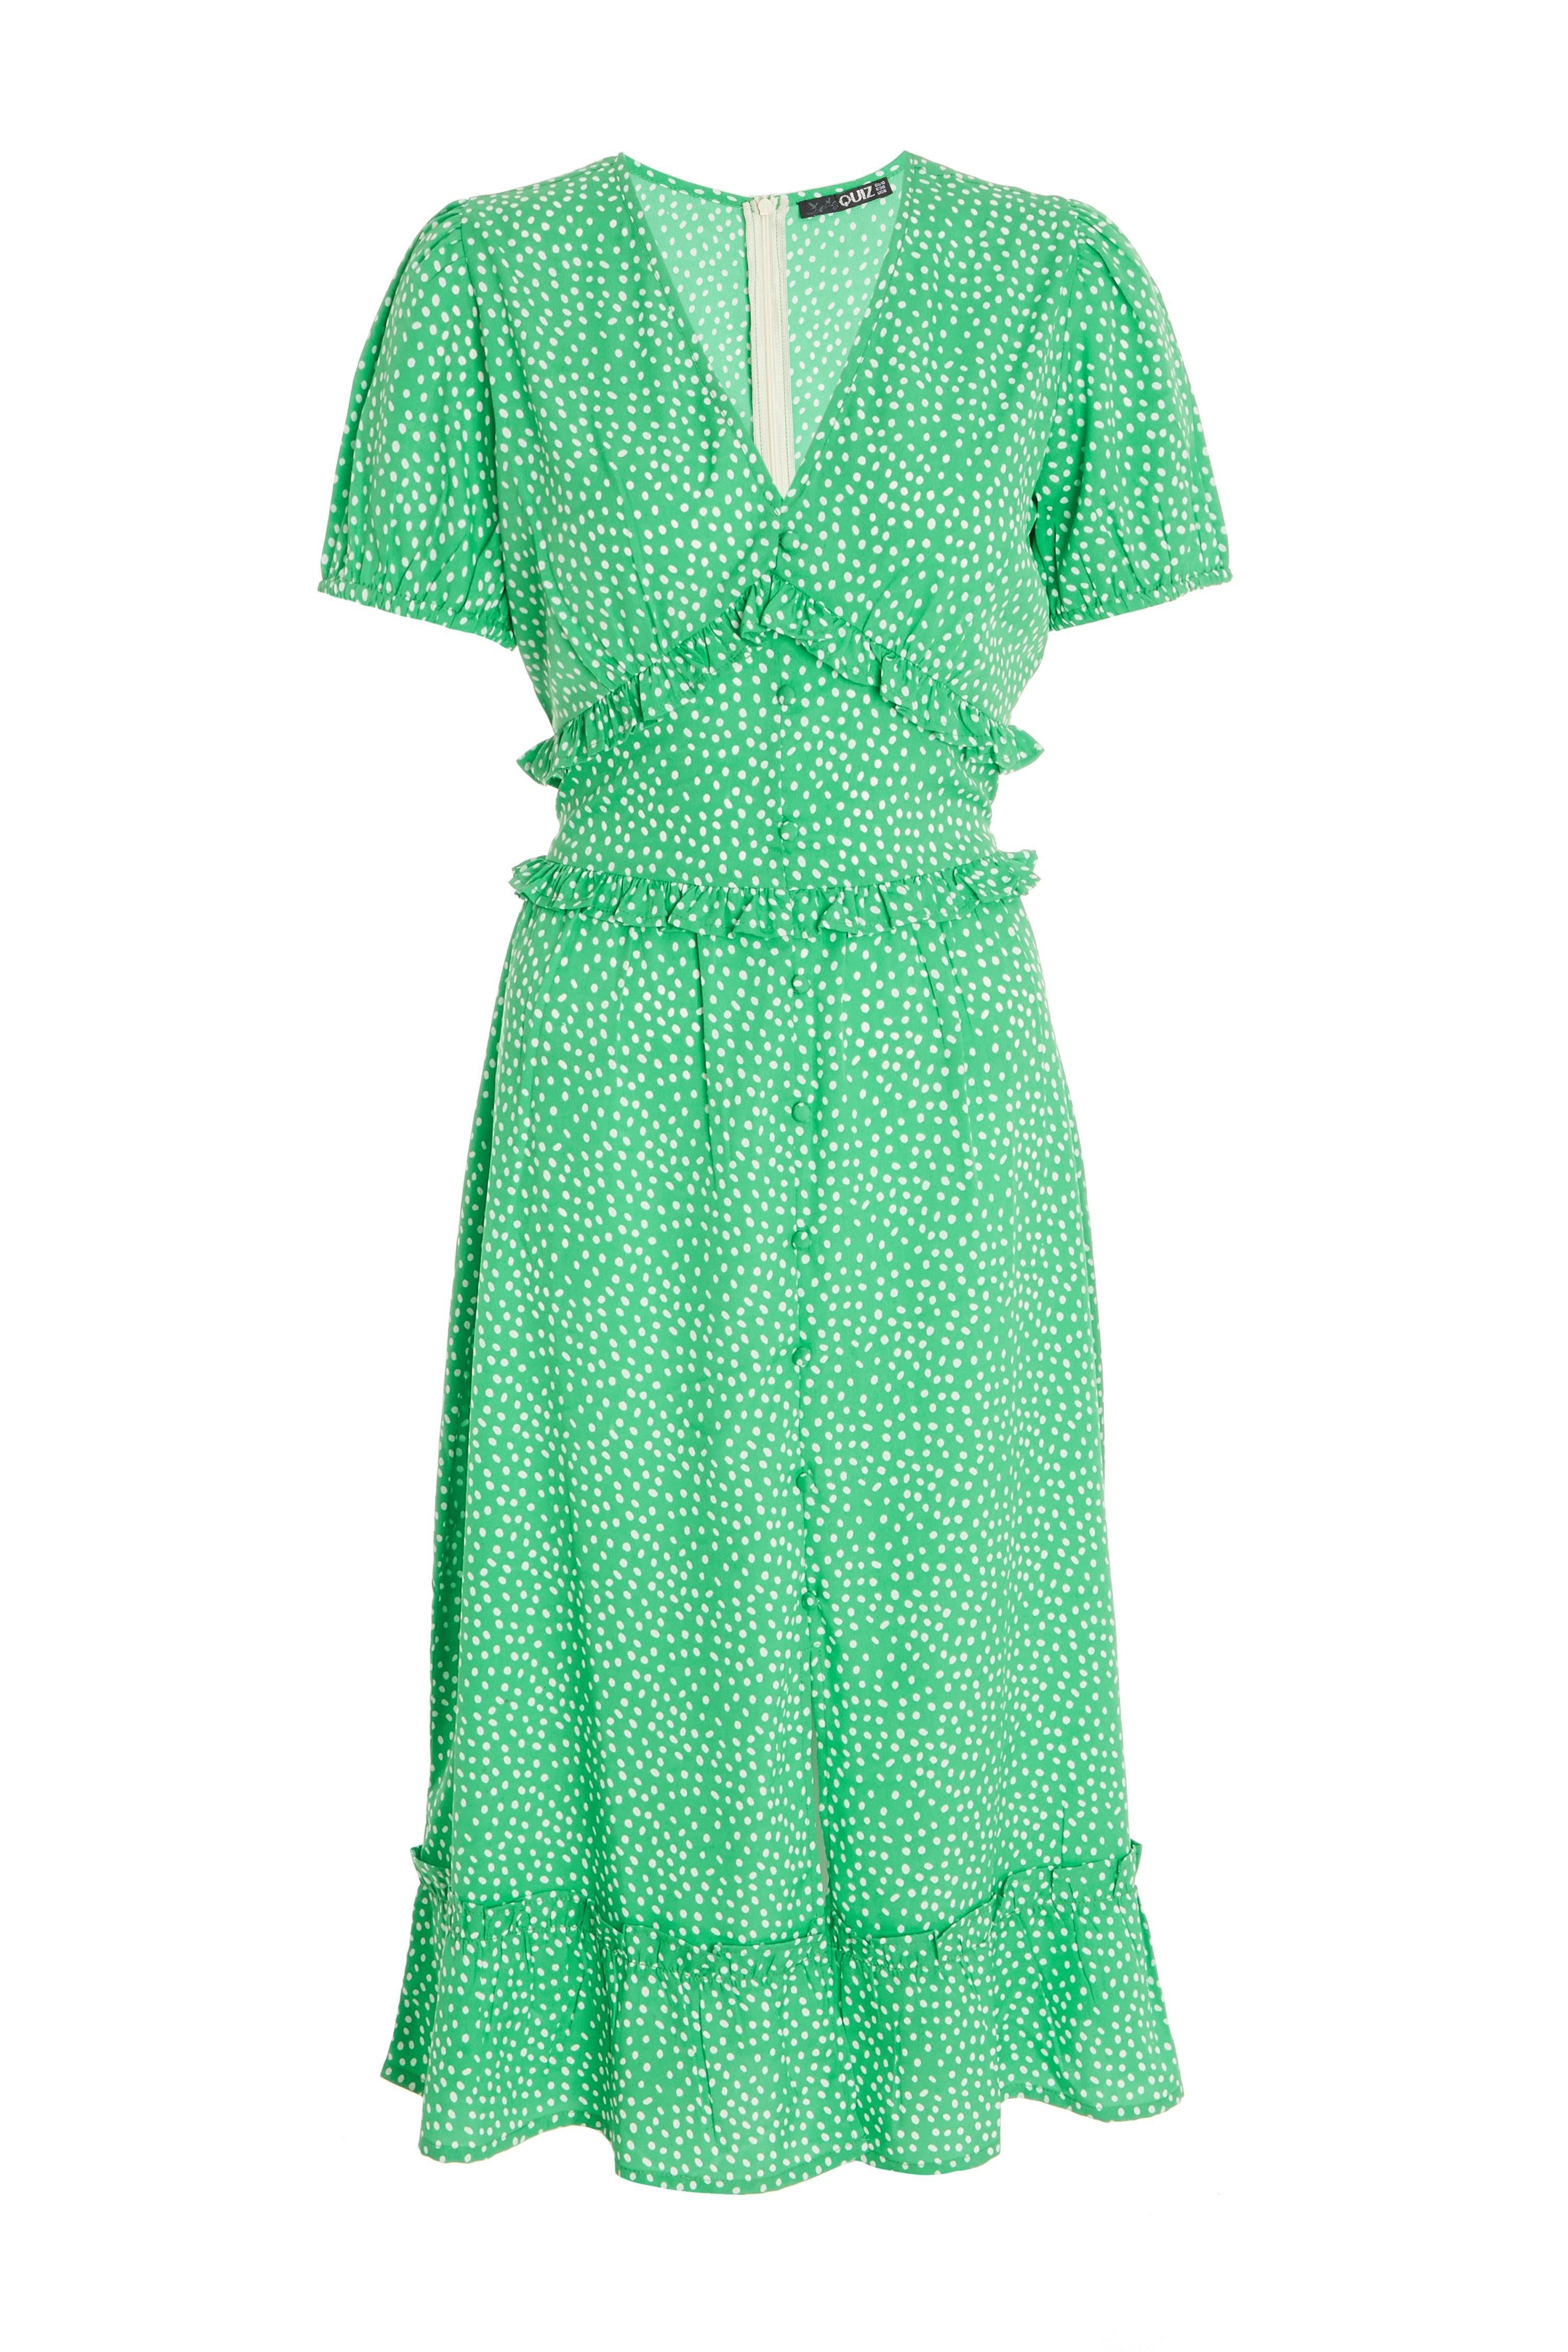 Green Polka Dot Print Midi Dress 6120